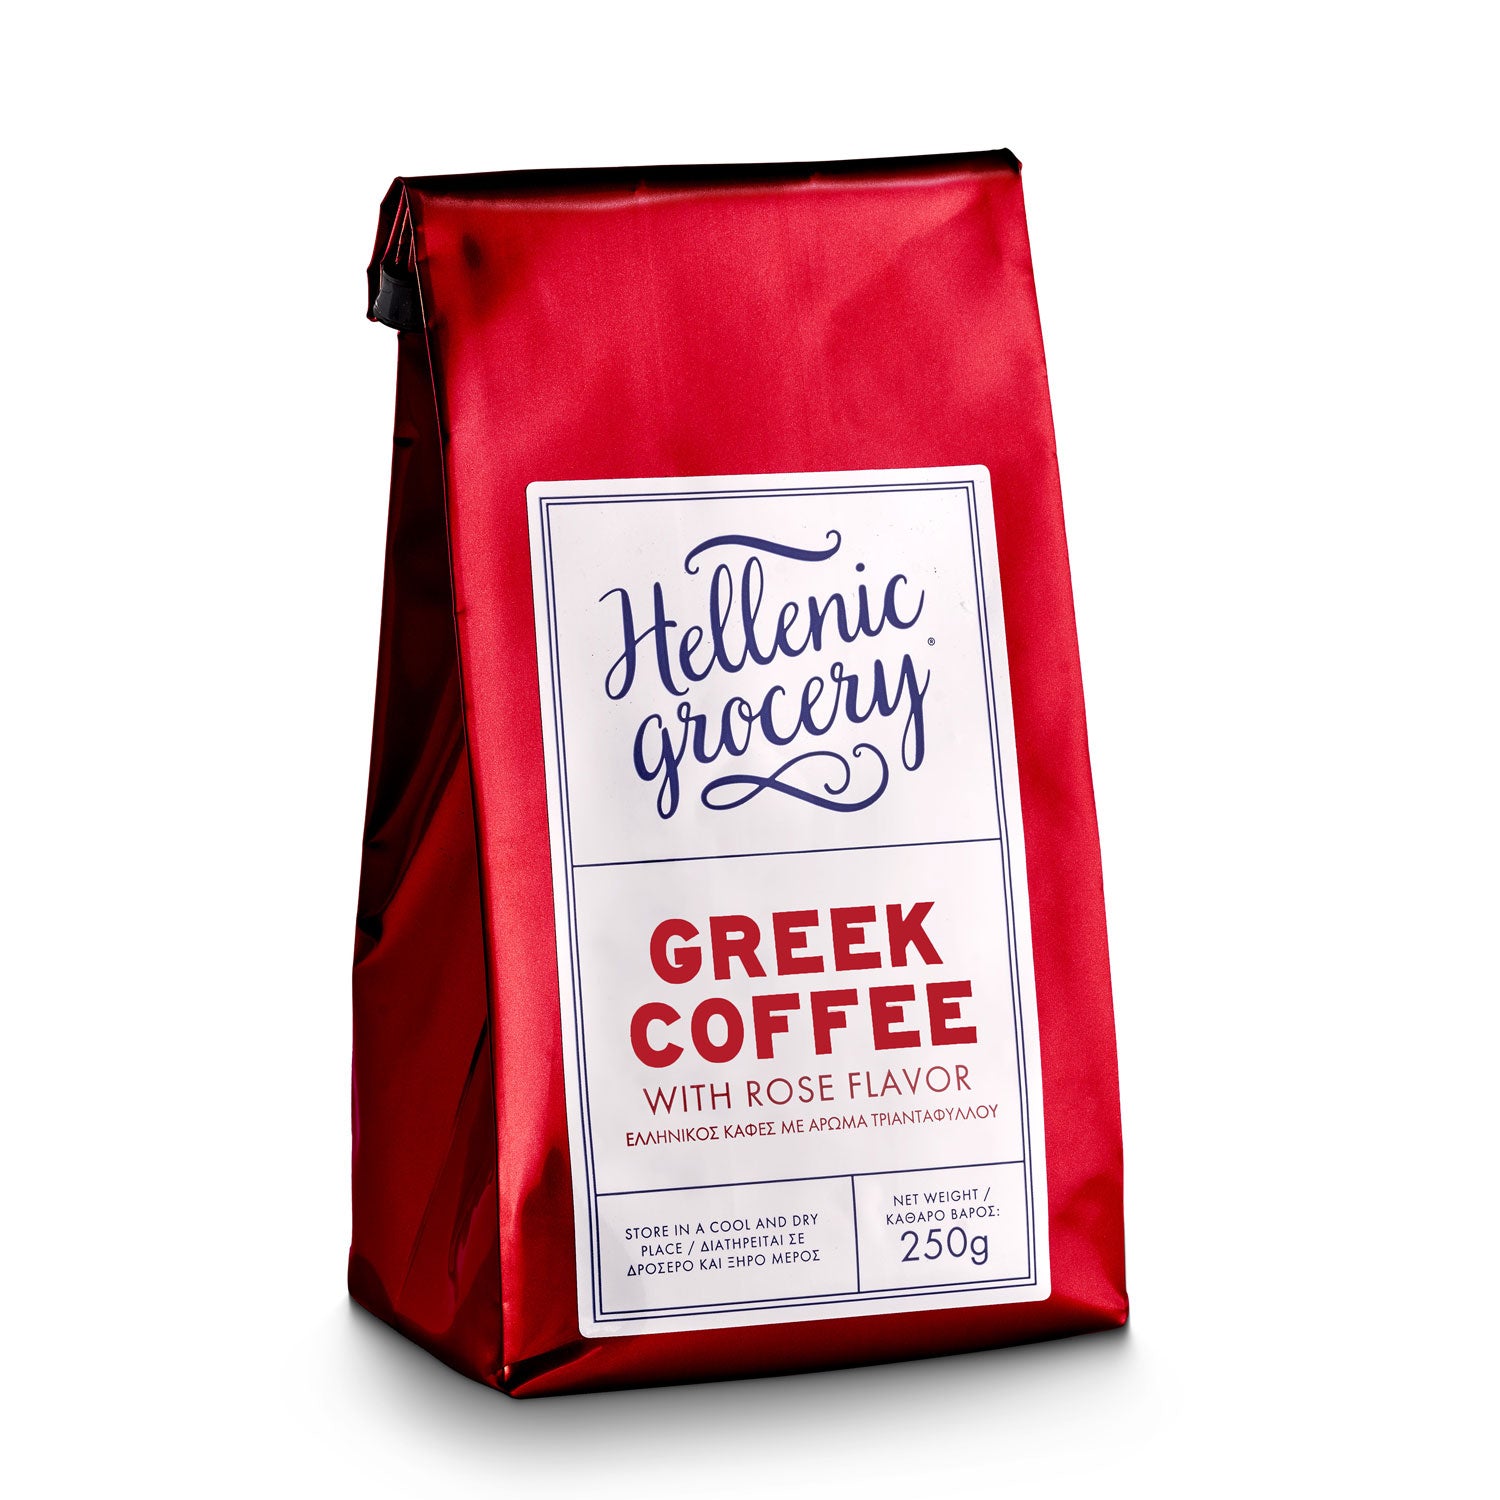 Griechische-Lebensmittel-Griechische-Produkte-griechischer-kaffee-rosengeschmack-250g-hellenic-grocery